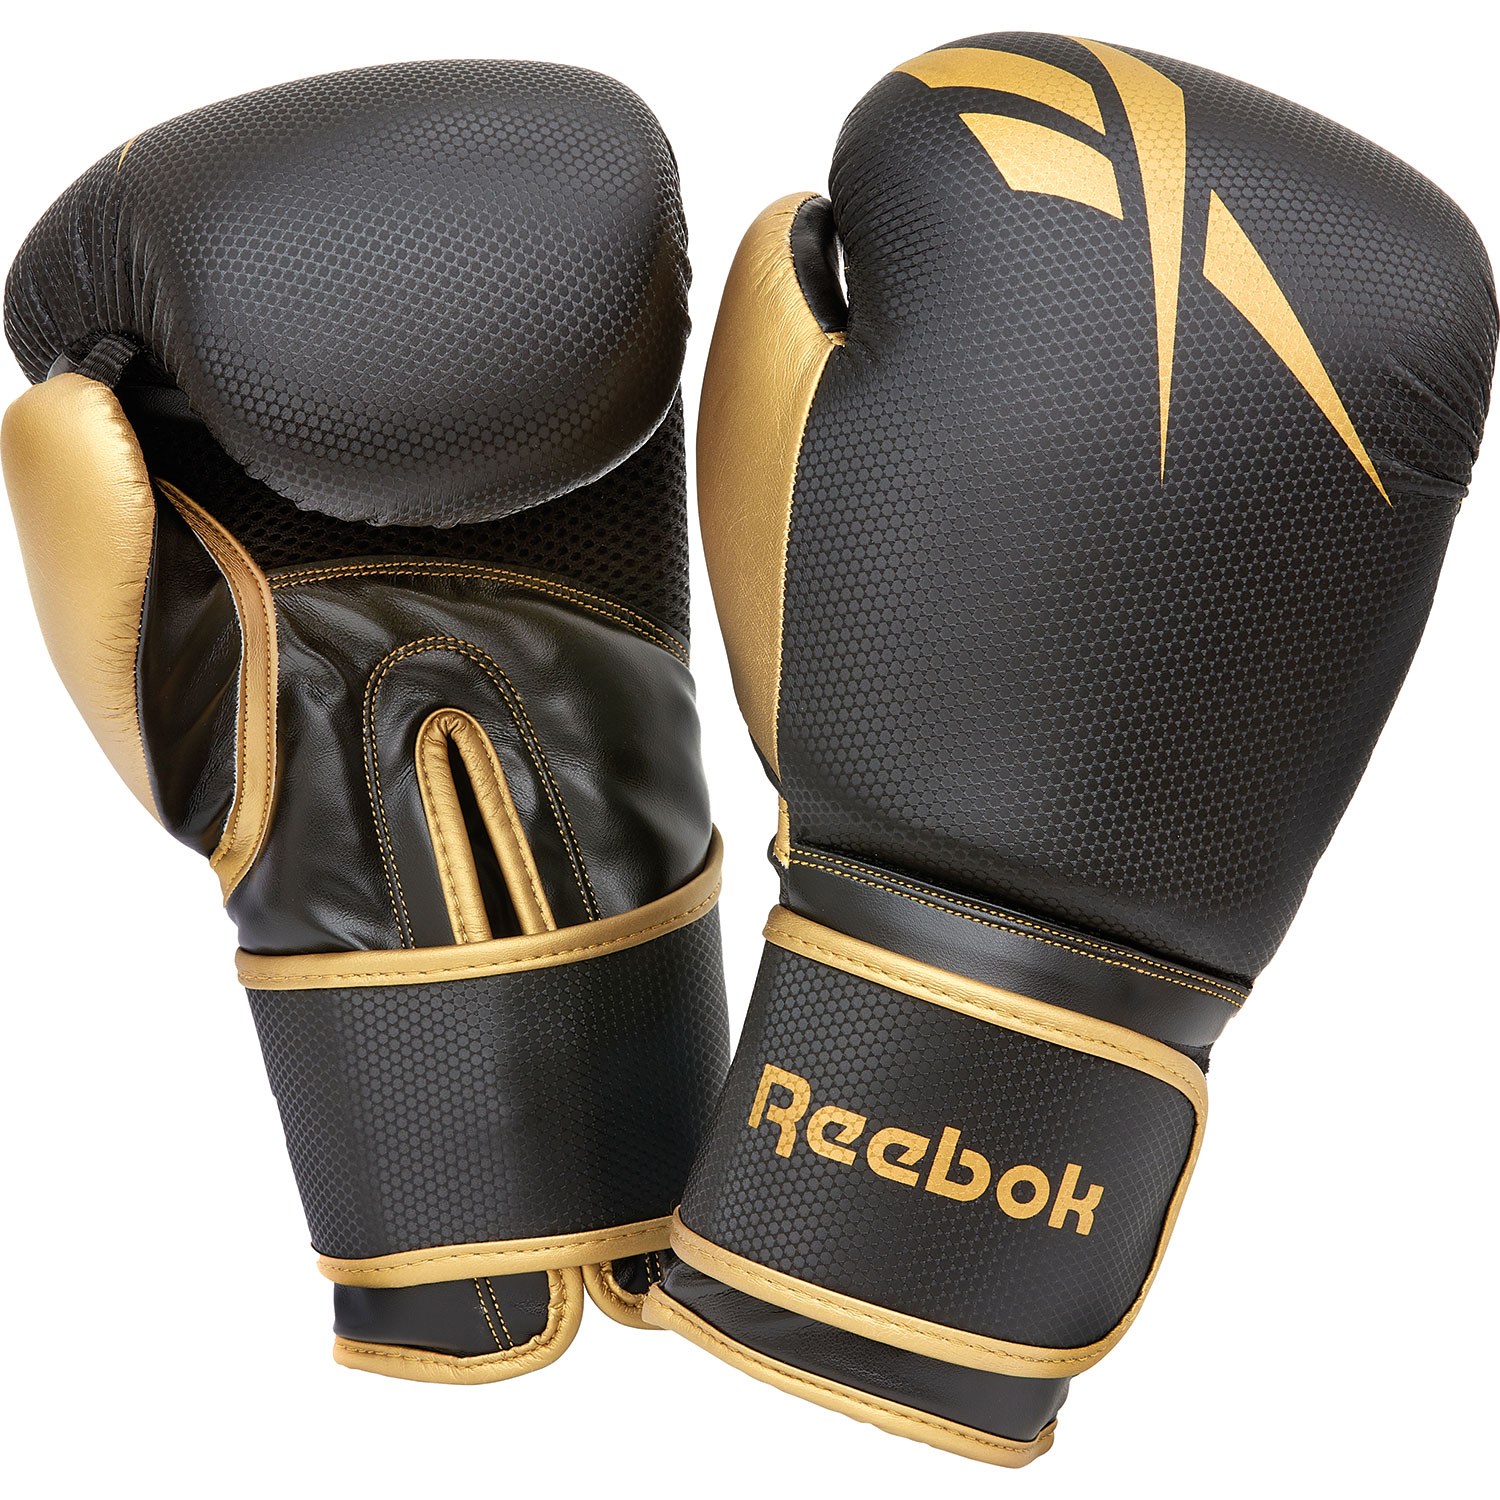 Reebok boxing gloves gold/black 10 oz